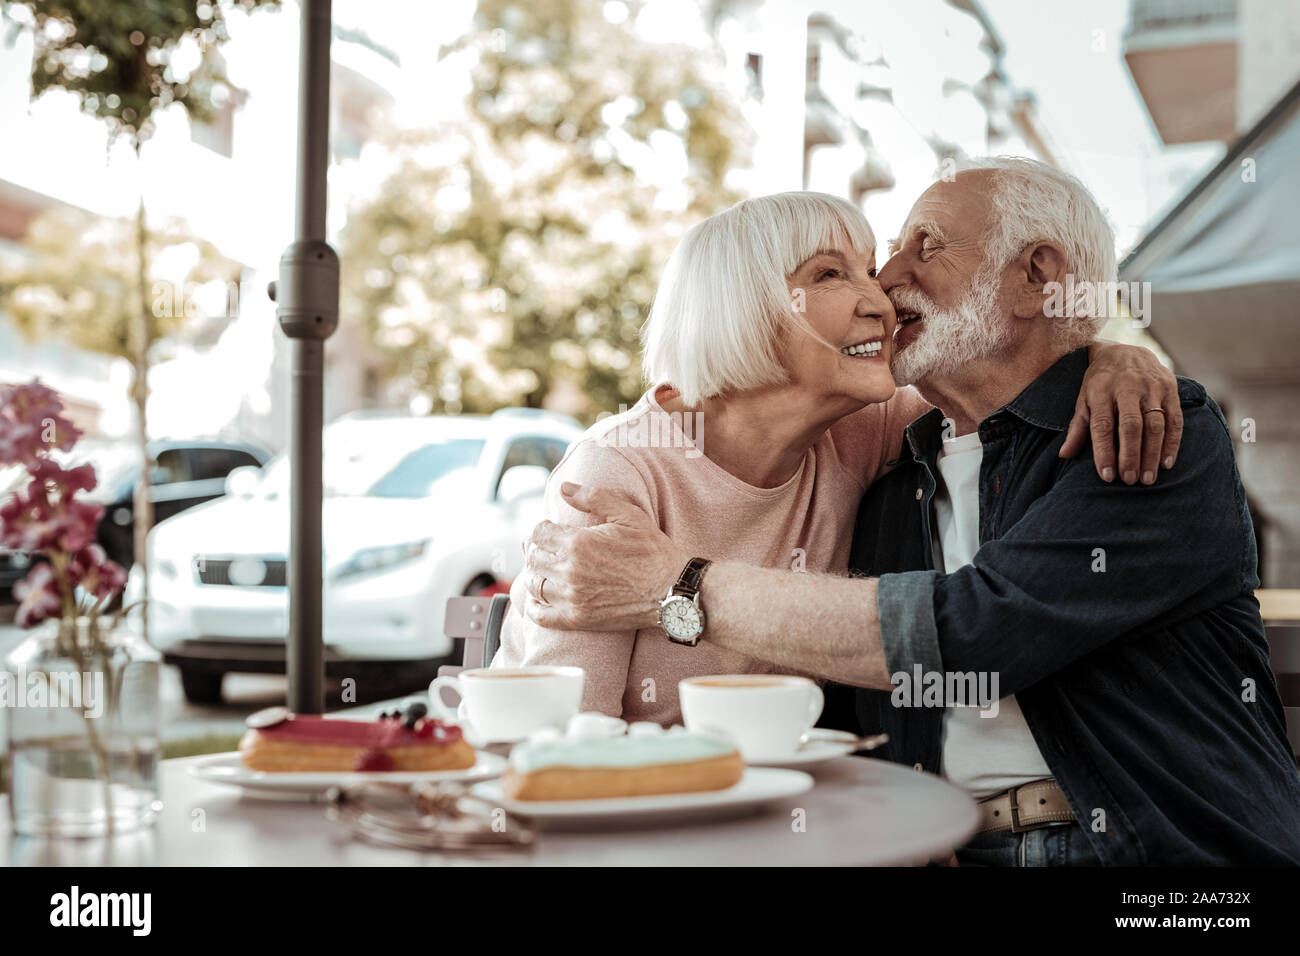 Joyful senior man wanting to kiss his wife Stock Photo